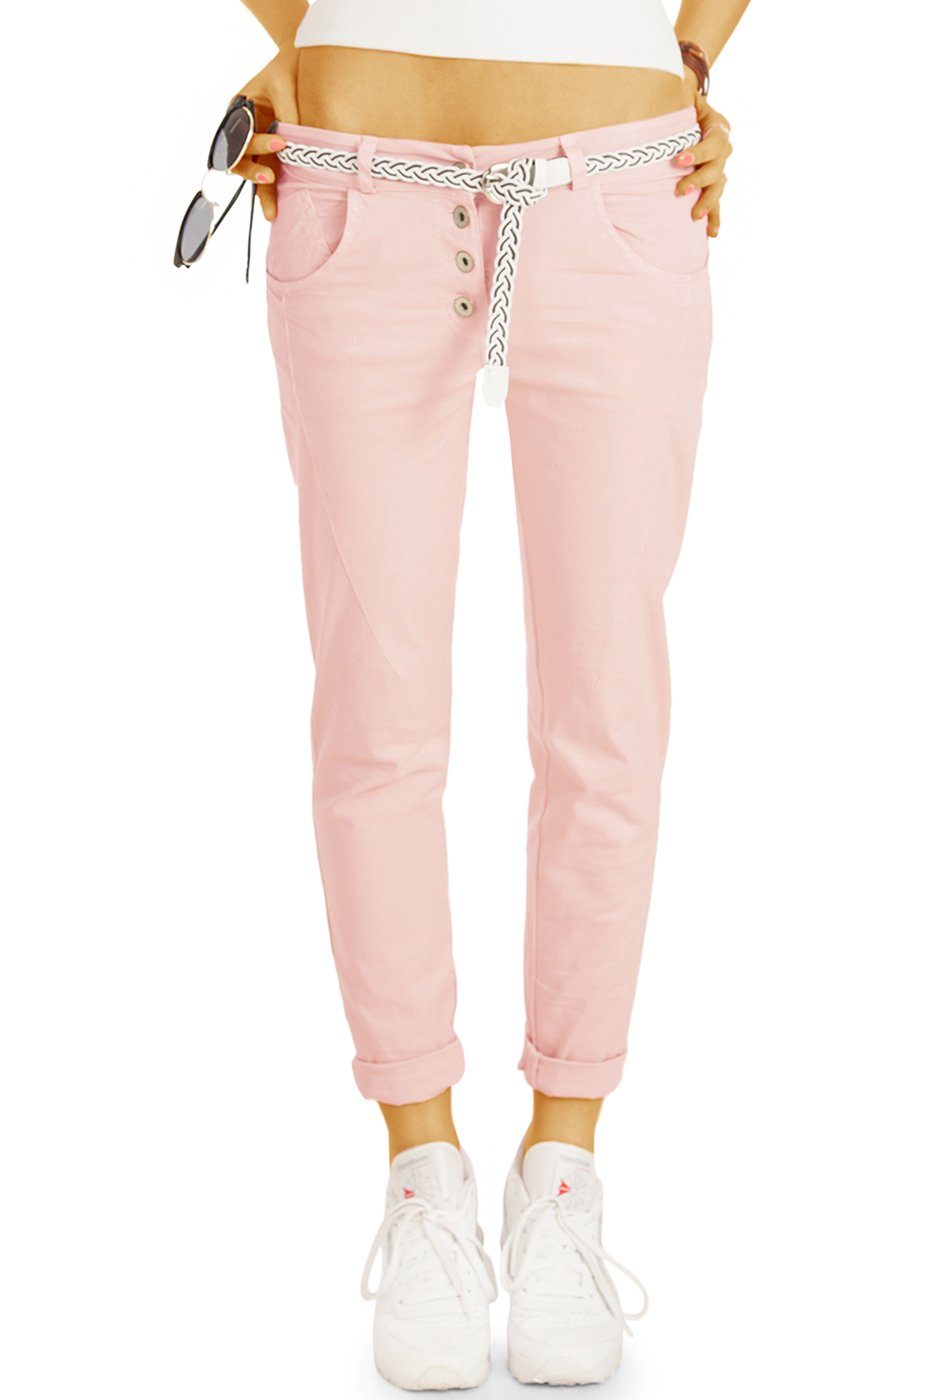 be styled Chinohose Stoffhosen mit Gürtel - legere hüftige Chinohosen - Damen - h18a in Unifarben rosa